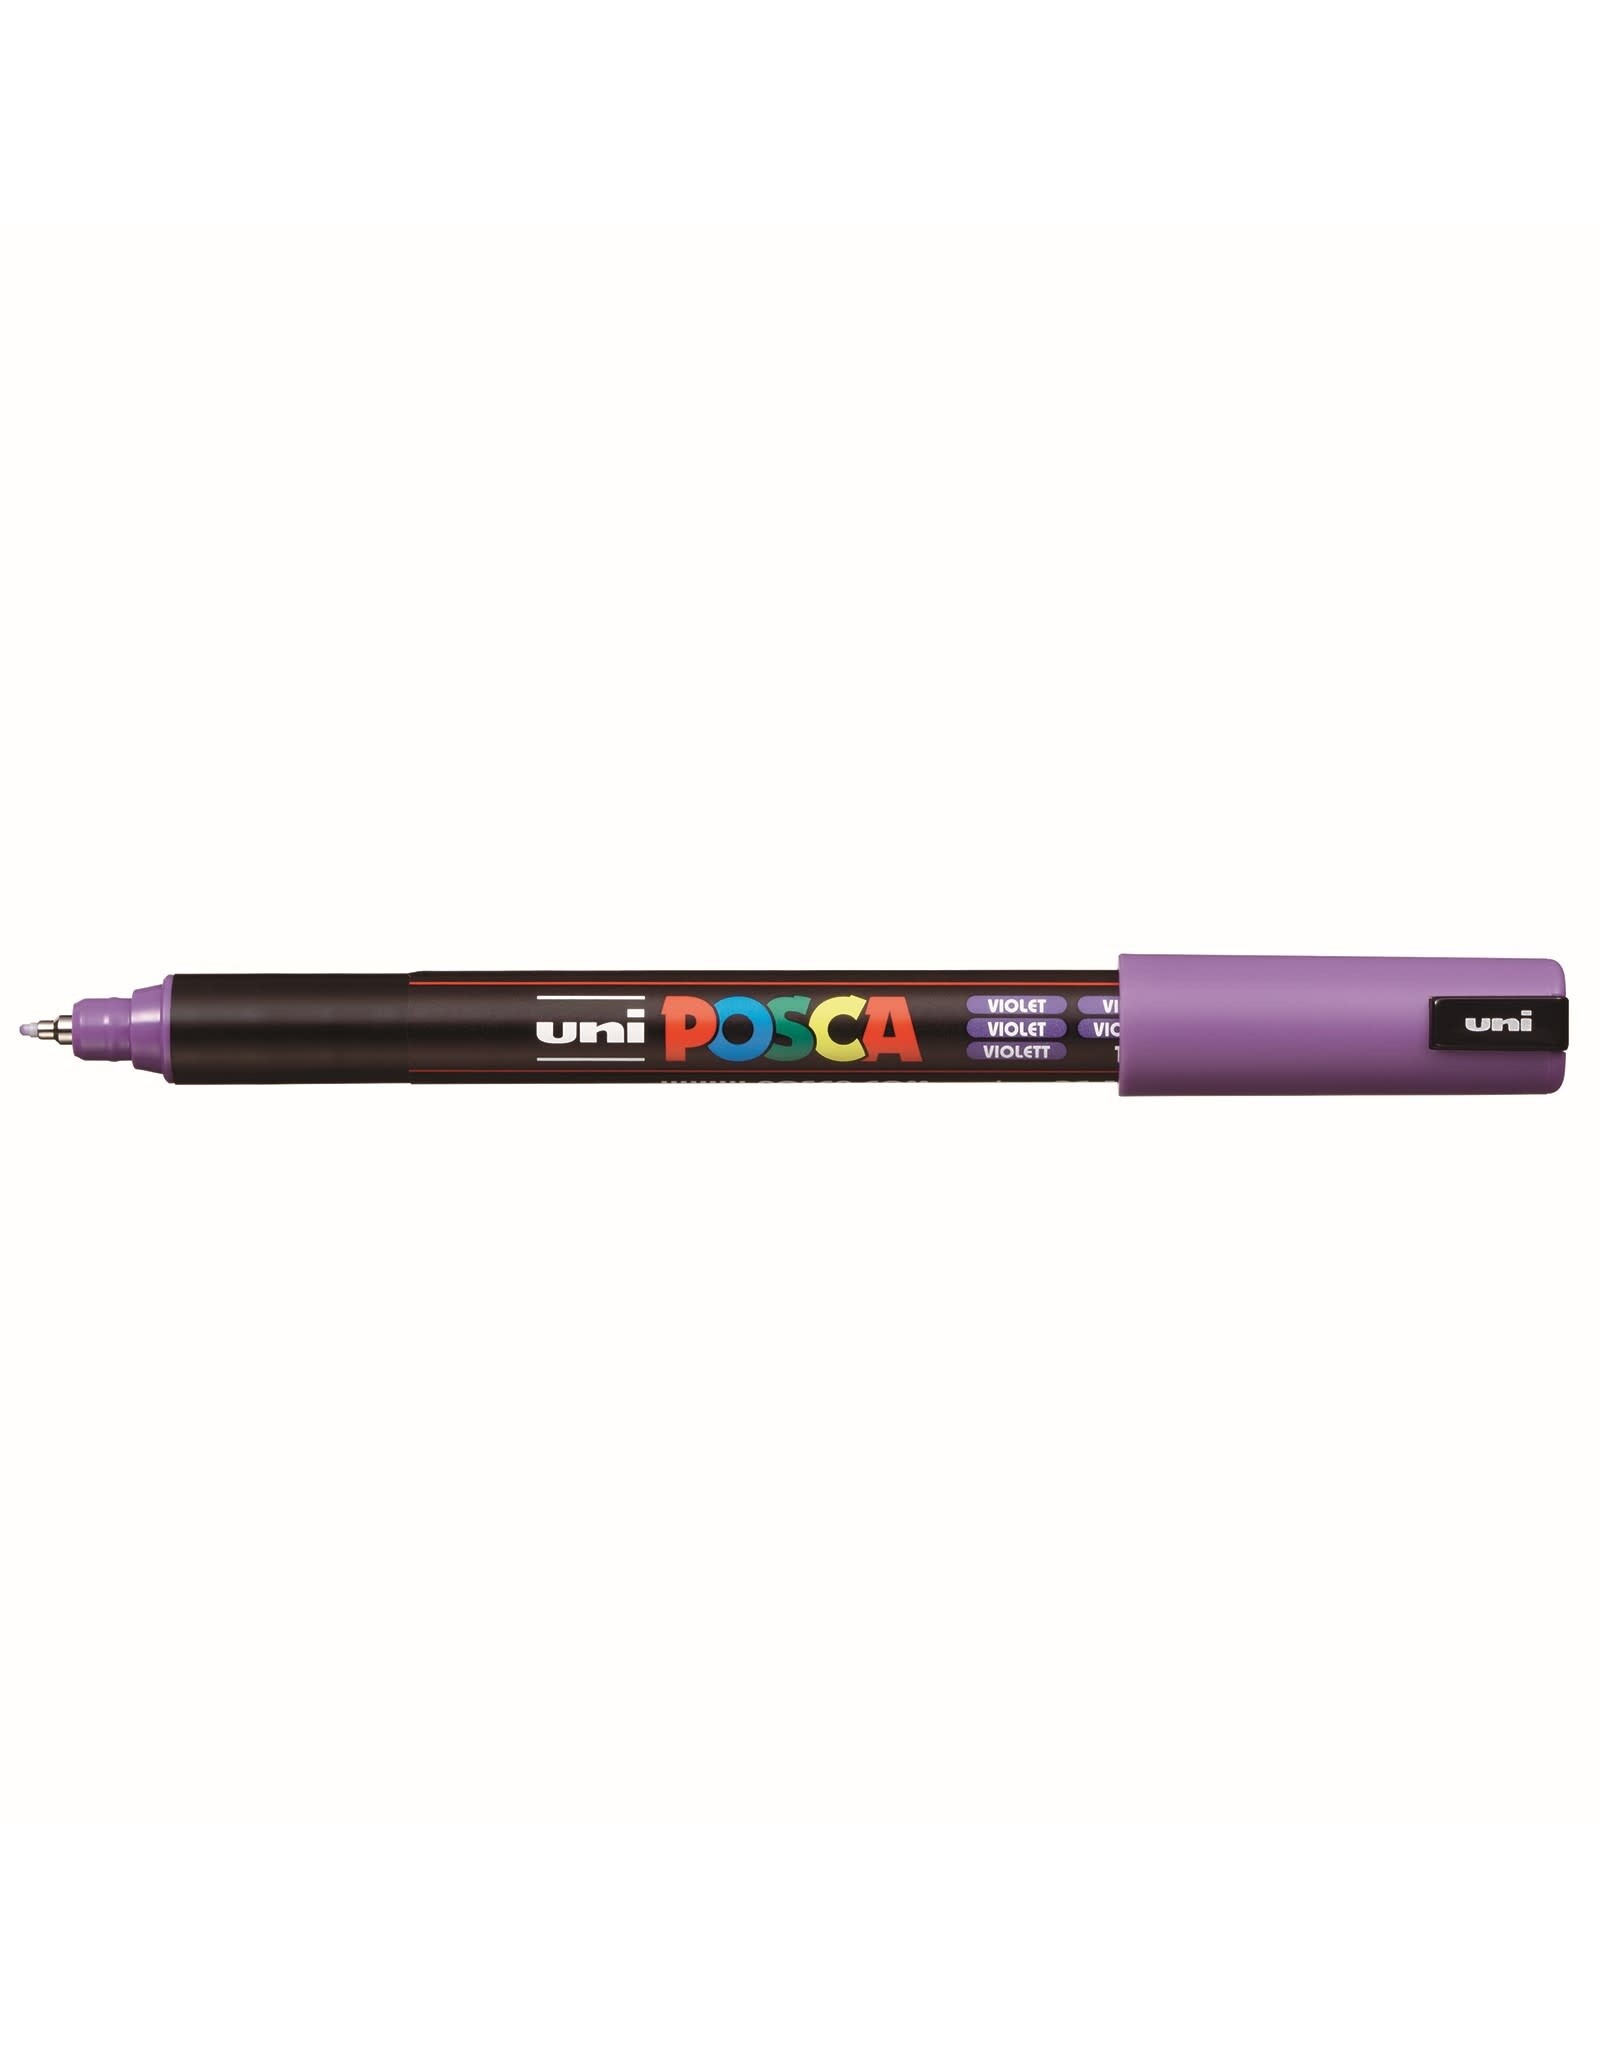 POSCA Uni POSCA Paint Marker, Extra Fine Metal Tip, Violet